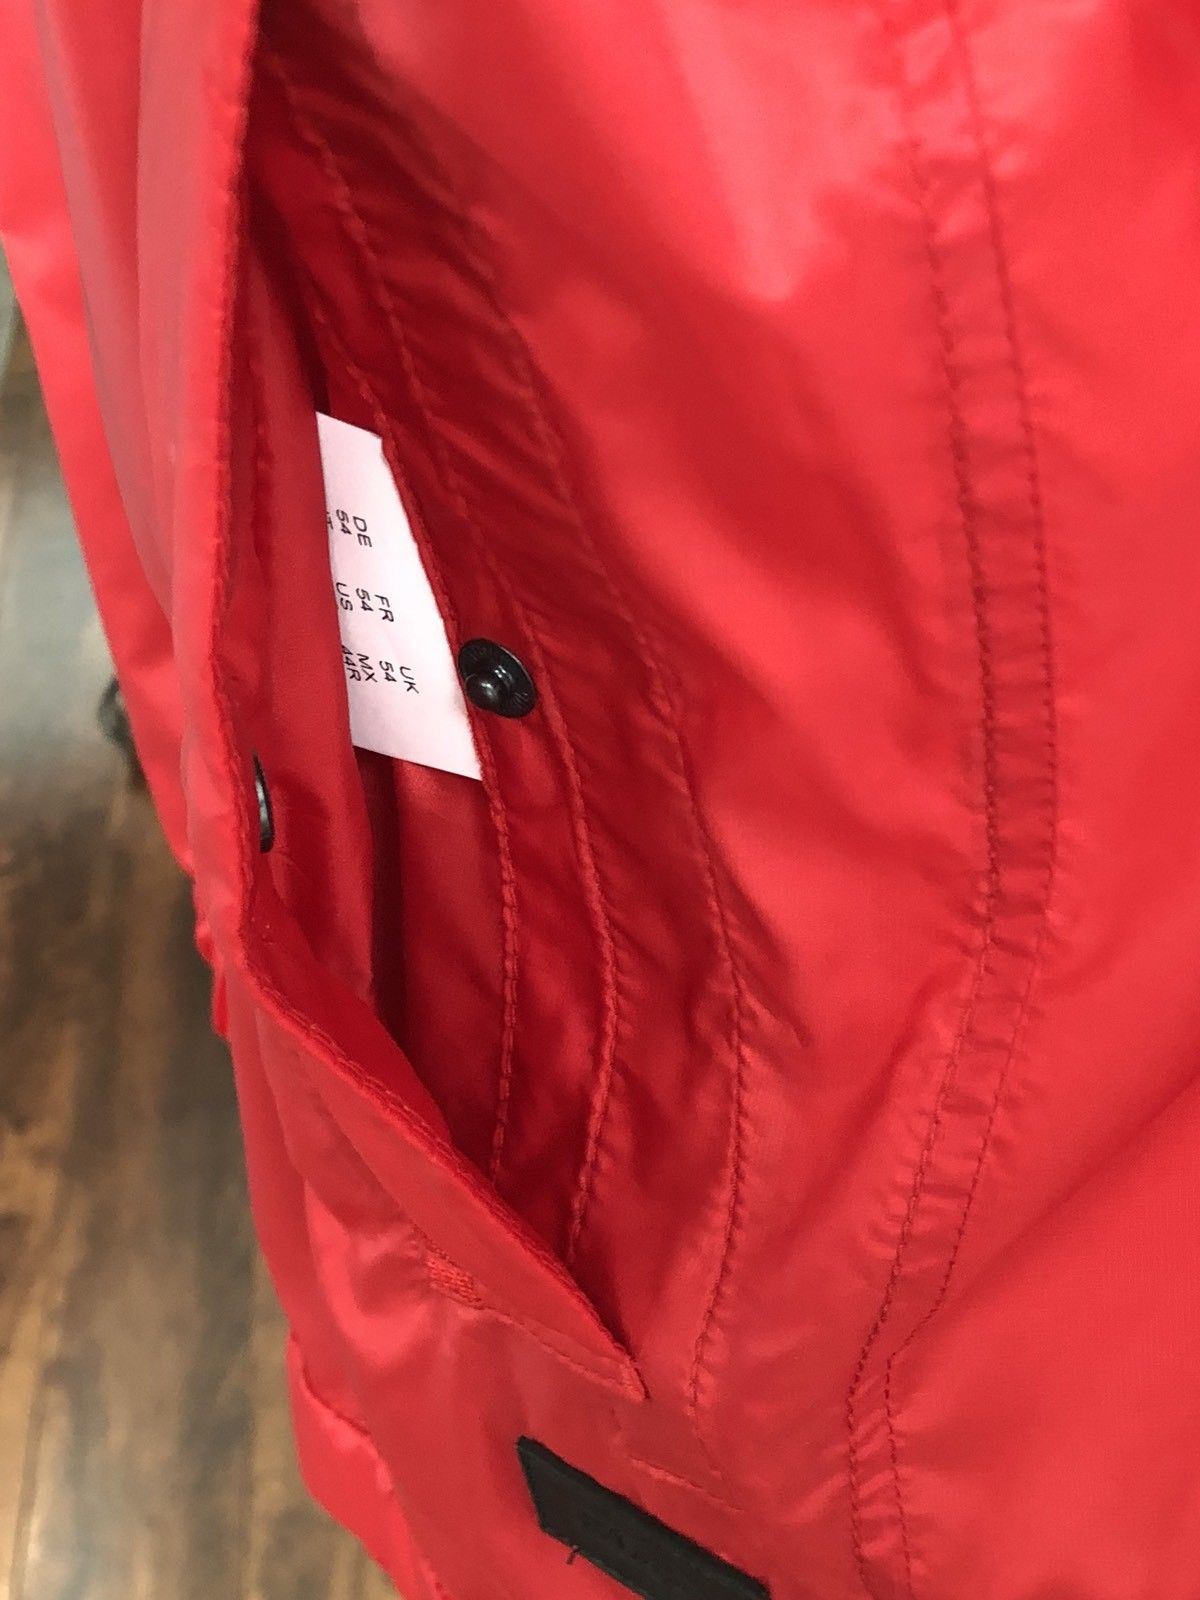 NWT $395 Boss Hugo Boss Black Label Colis Rain Jacket Bright Red Size 42R US - BAYSUPERSTORE